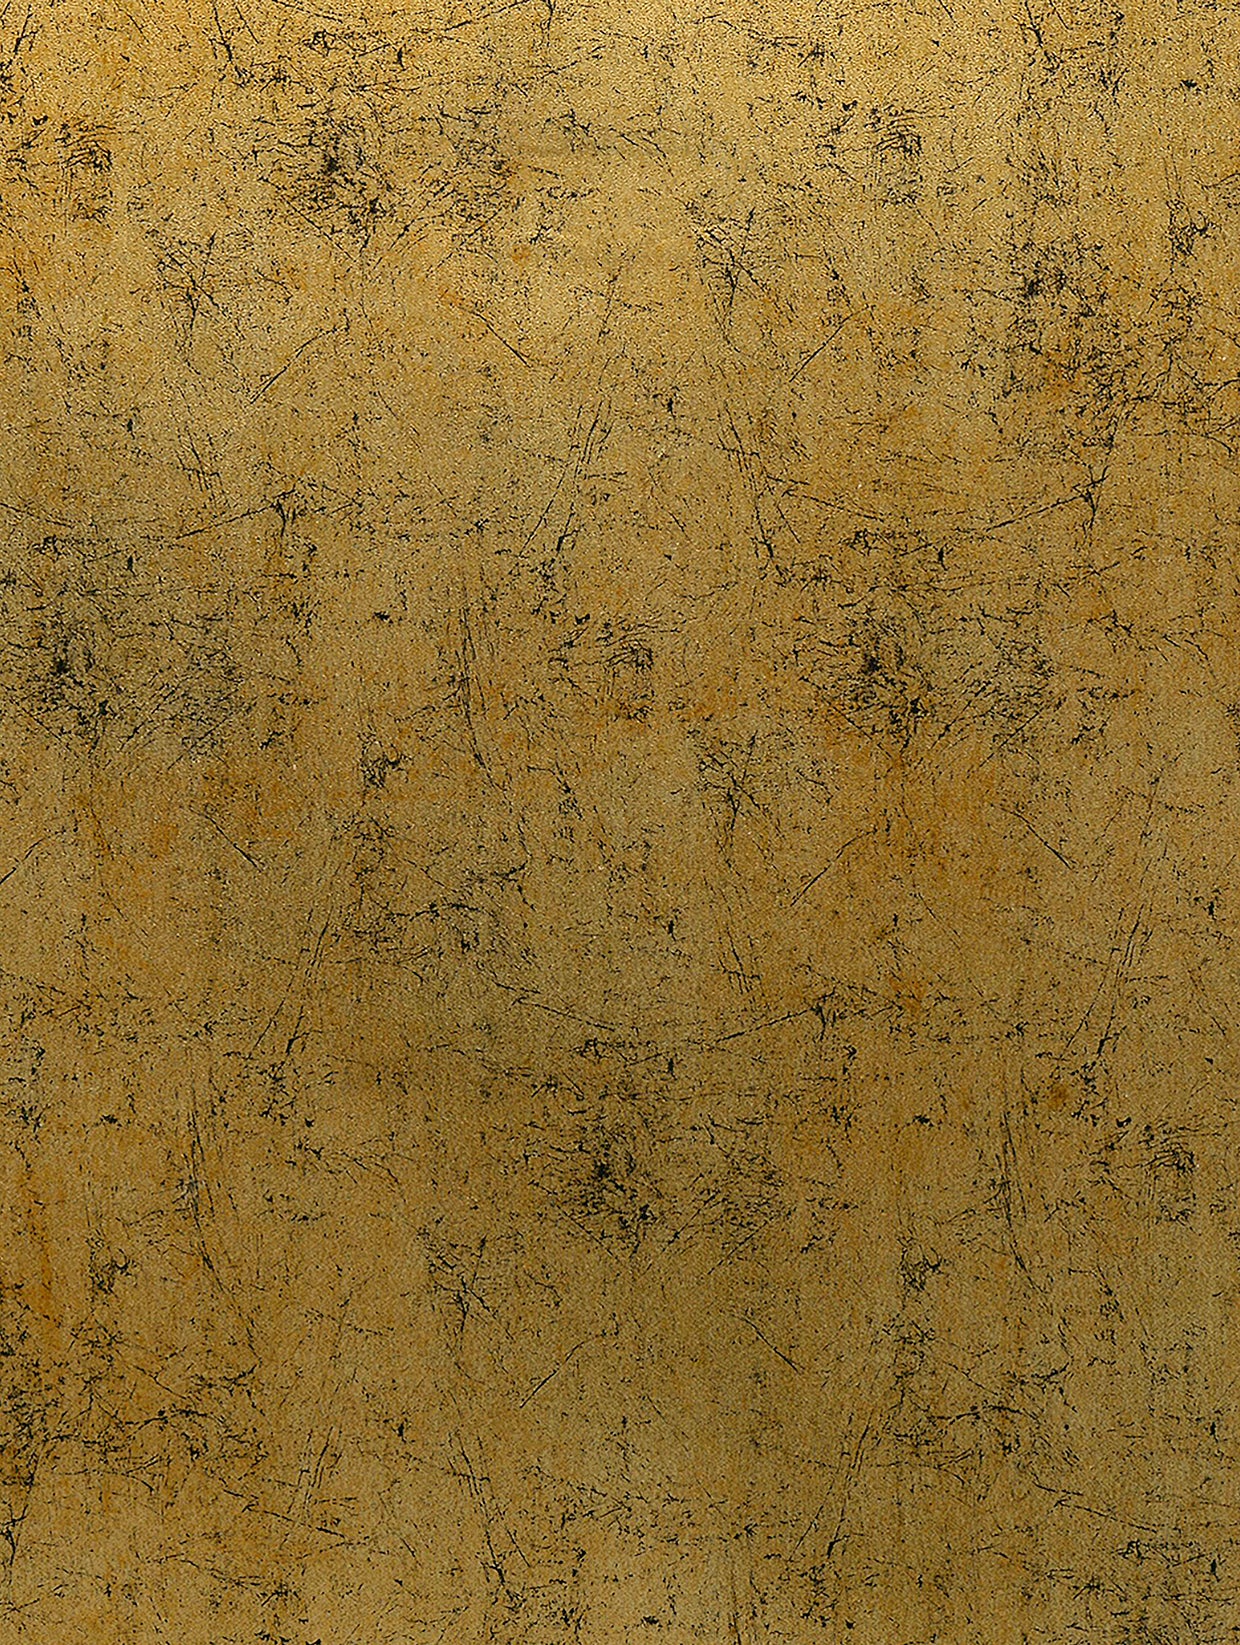 Steel-Rust Prestige | Metalldekor Rost Soft - Möbelfolie Selbstklebende Tapete Vinyl Folie für Möbel Wand Regal (100x122cm)